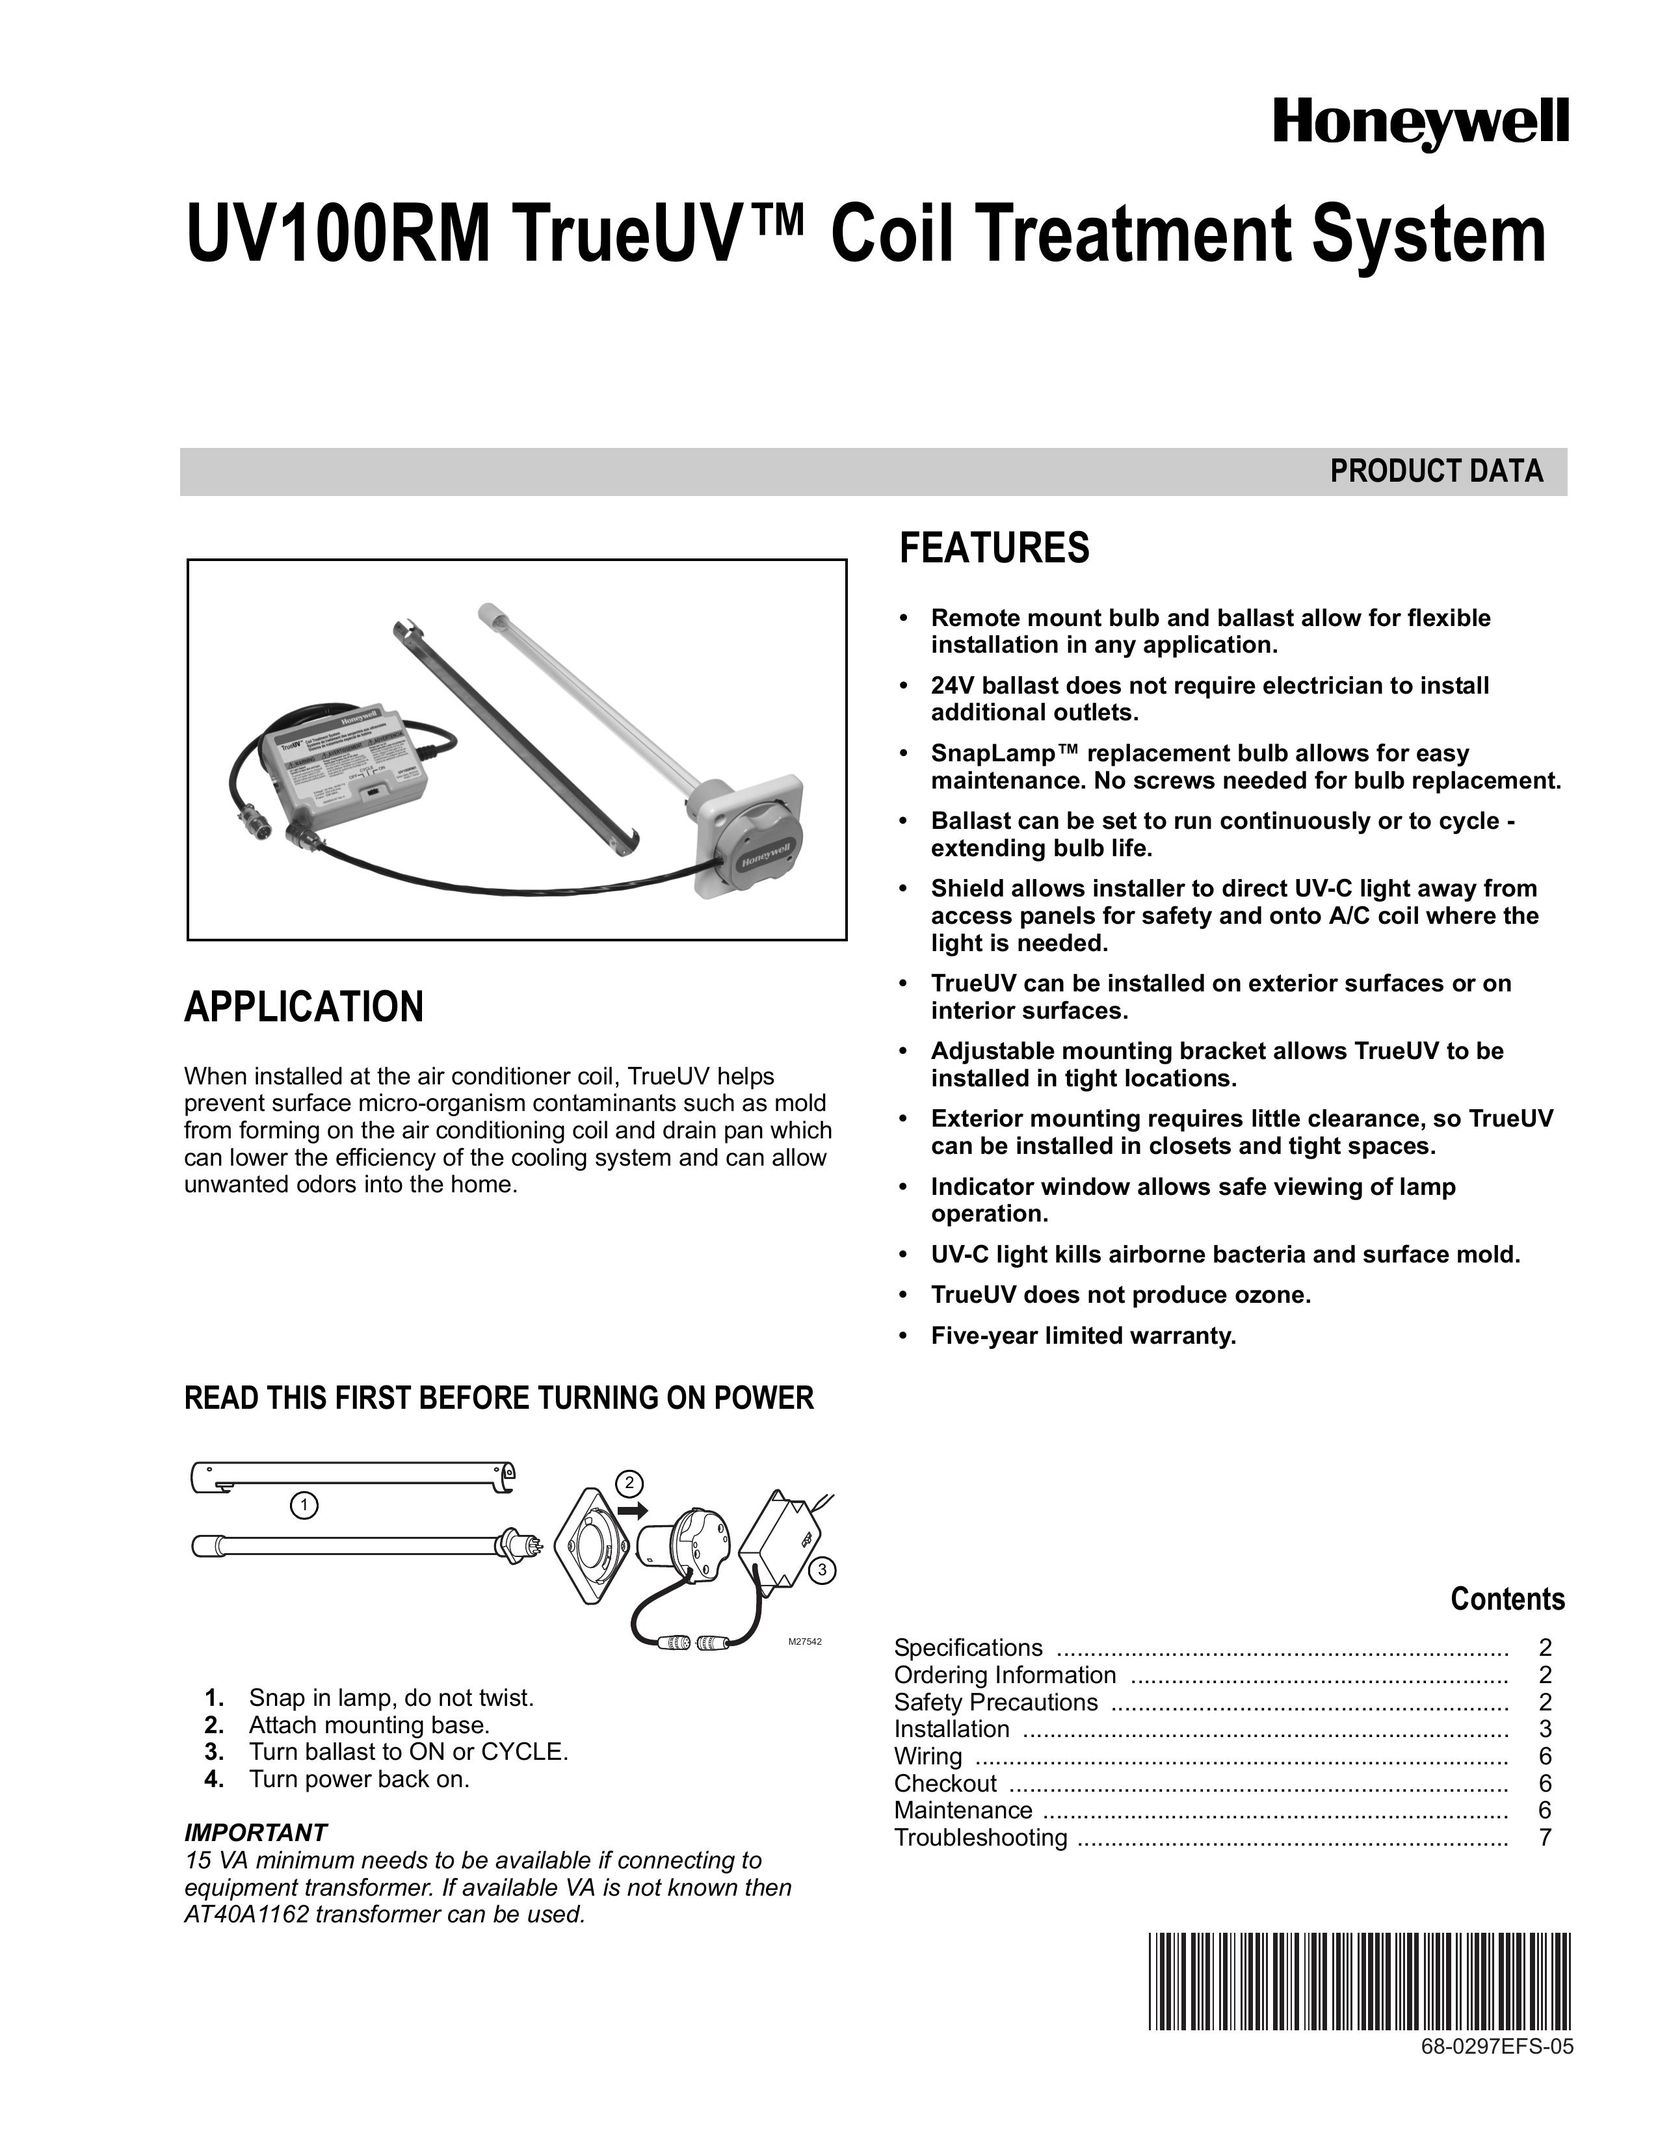 Honeywell UV100RM Air Conditioner User Manual